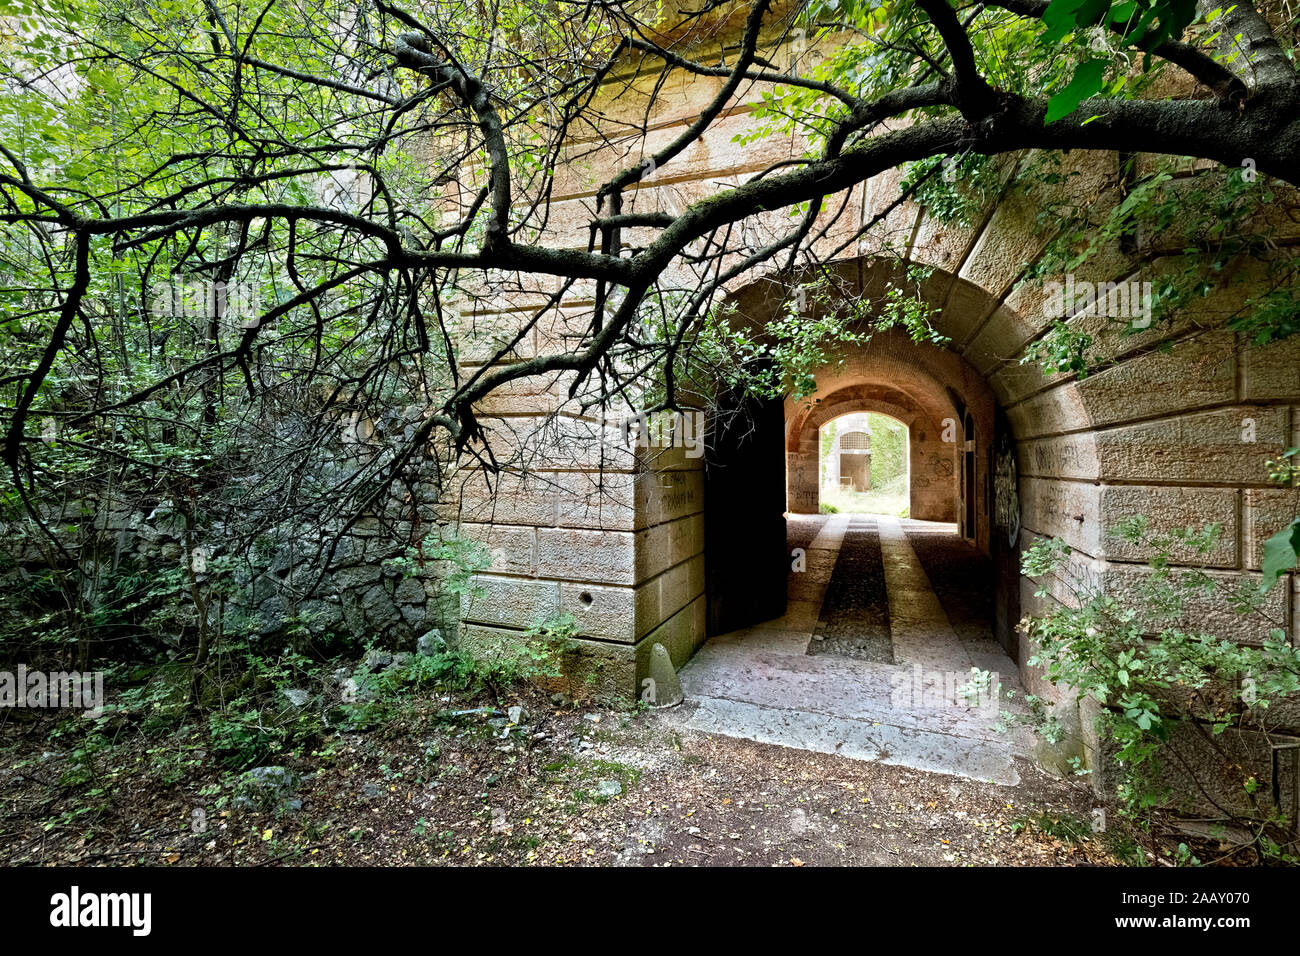 The entrance to Fort Hlawaty is hidden by vegetation. Ceraino, Verona province, Veneto, Italy, Europe. Stock Photo